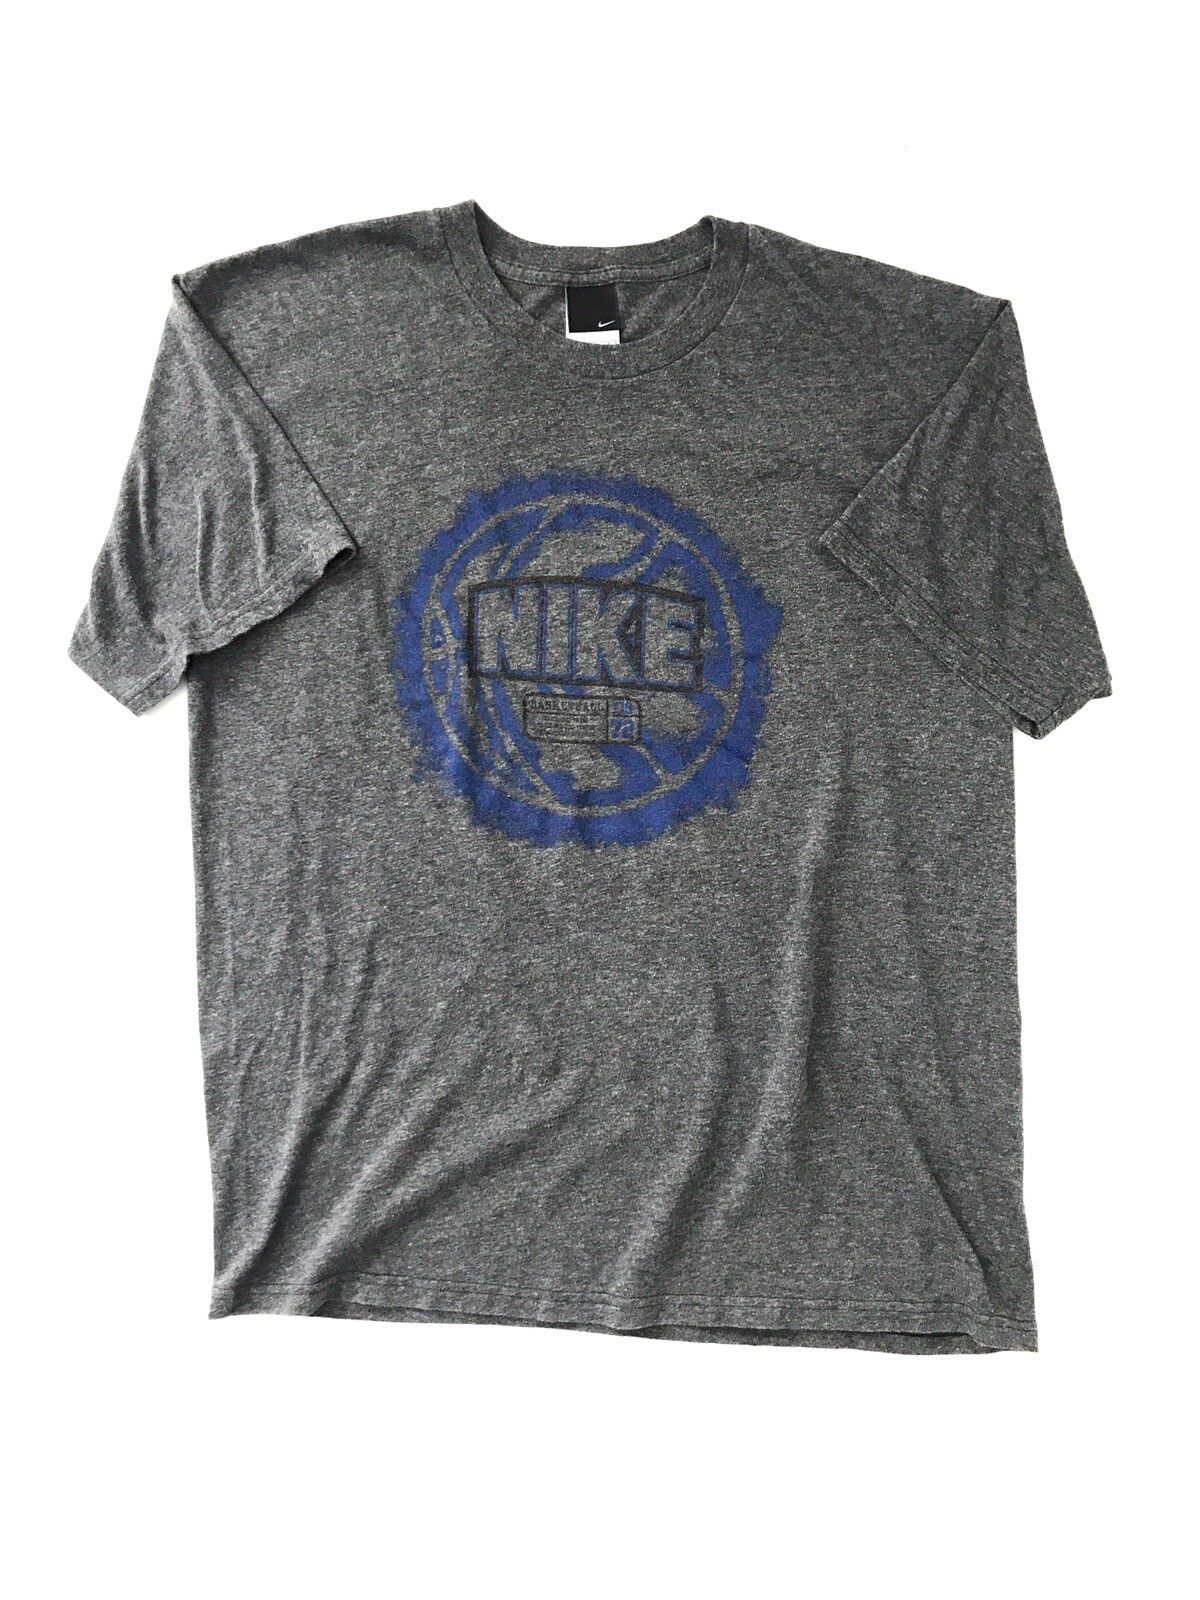 Nike Vintage Nike Silver Tag Basketball T-shirt Size US L / EU 52-54 / 3 - 1 Preview